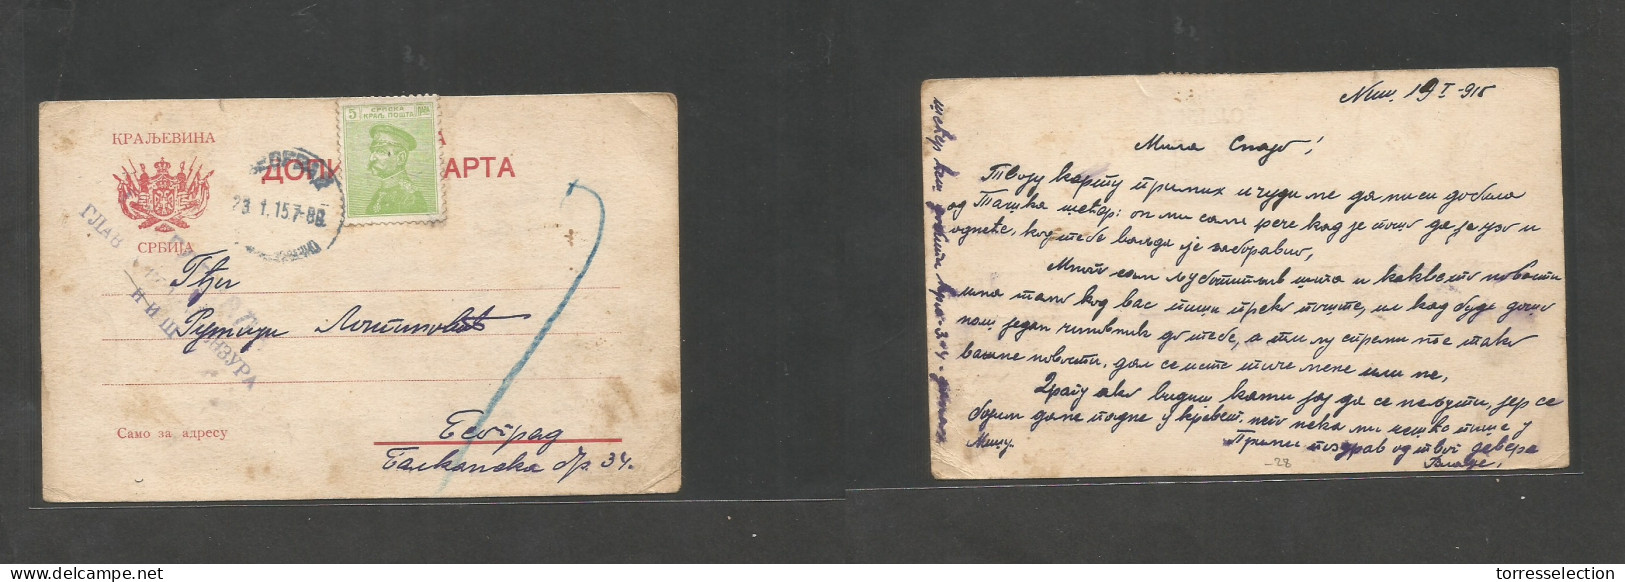 SERBIA. 1915 (23 Jan) Num - Belgrade. WWI. Fkd Military Card 5p Light Green, Censor Cachet. Fine. - Serbie